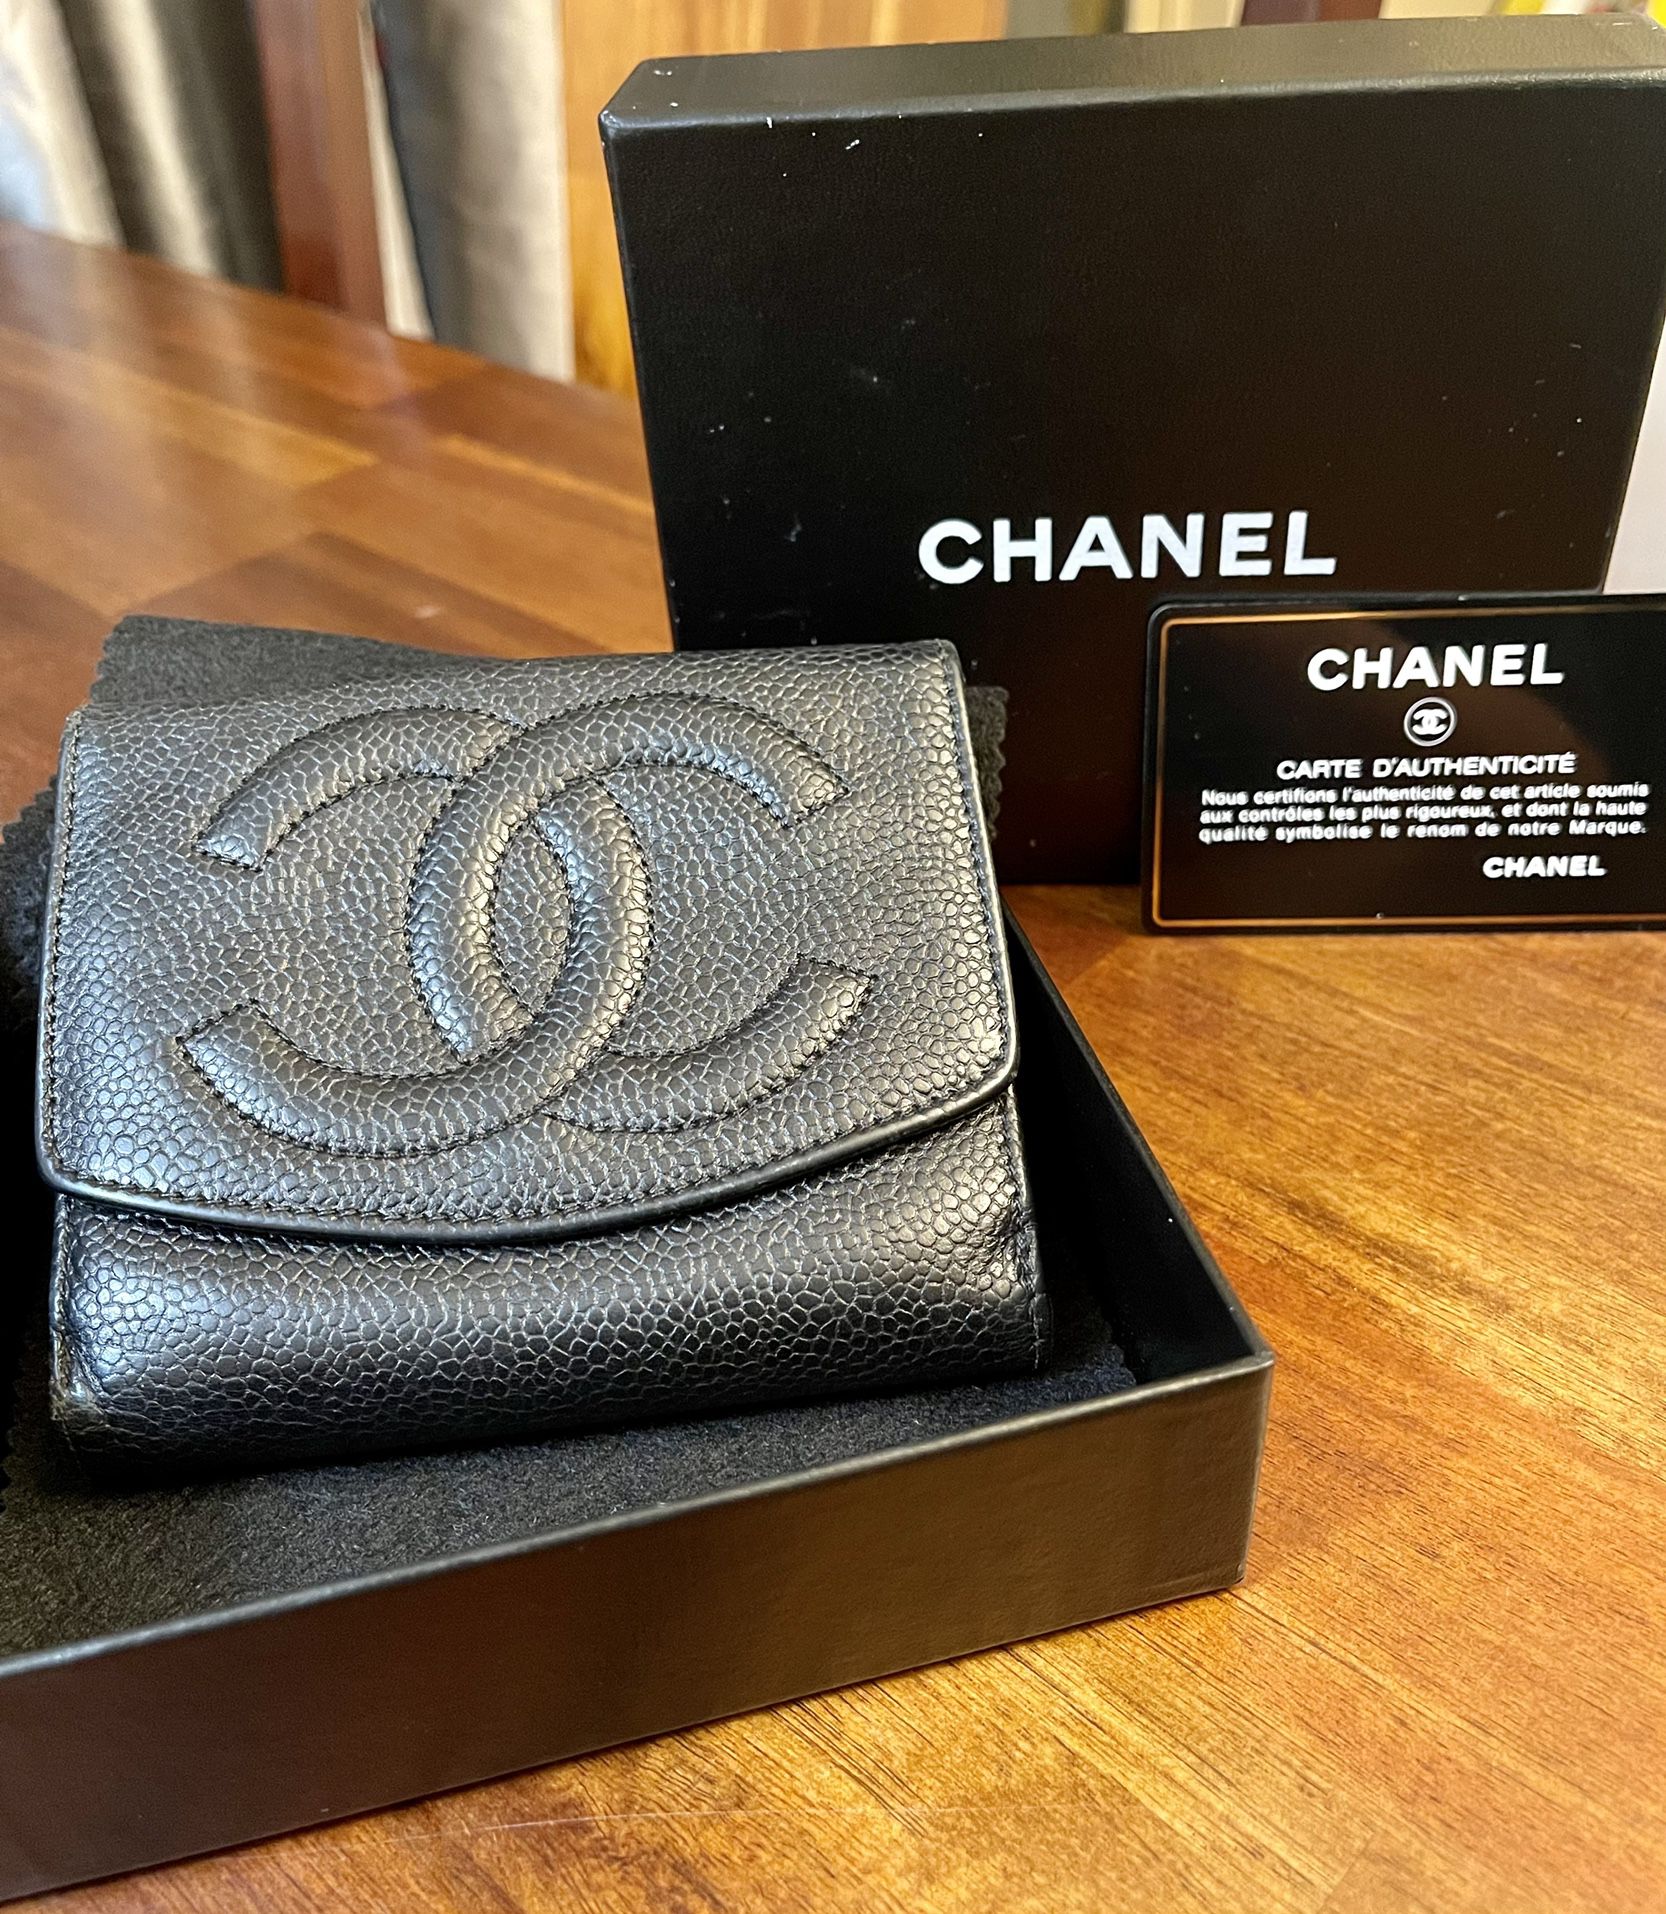 CHANEL Caviar Timeless CC Compact Wallet Black 147533